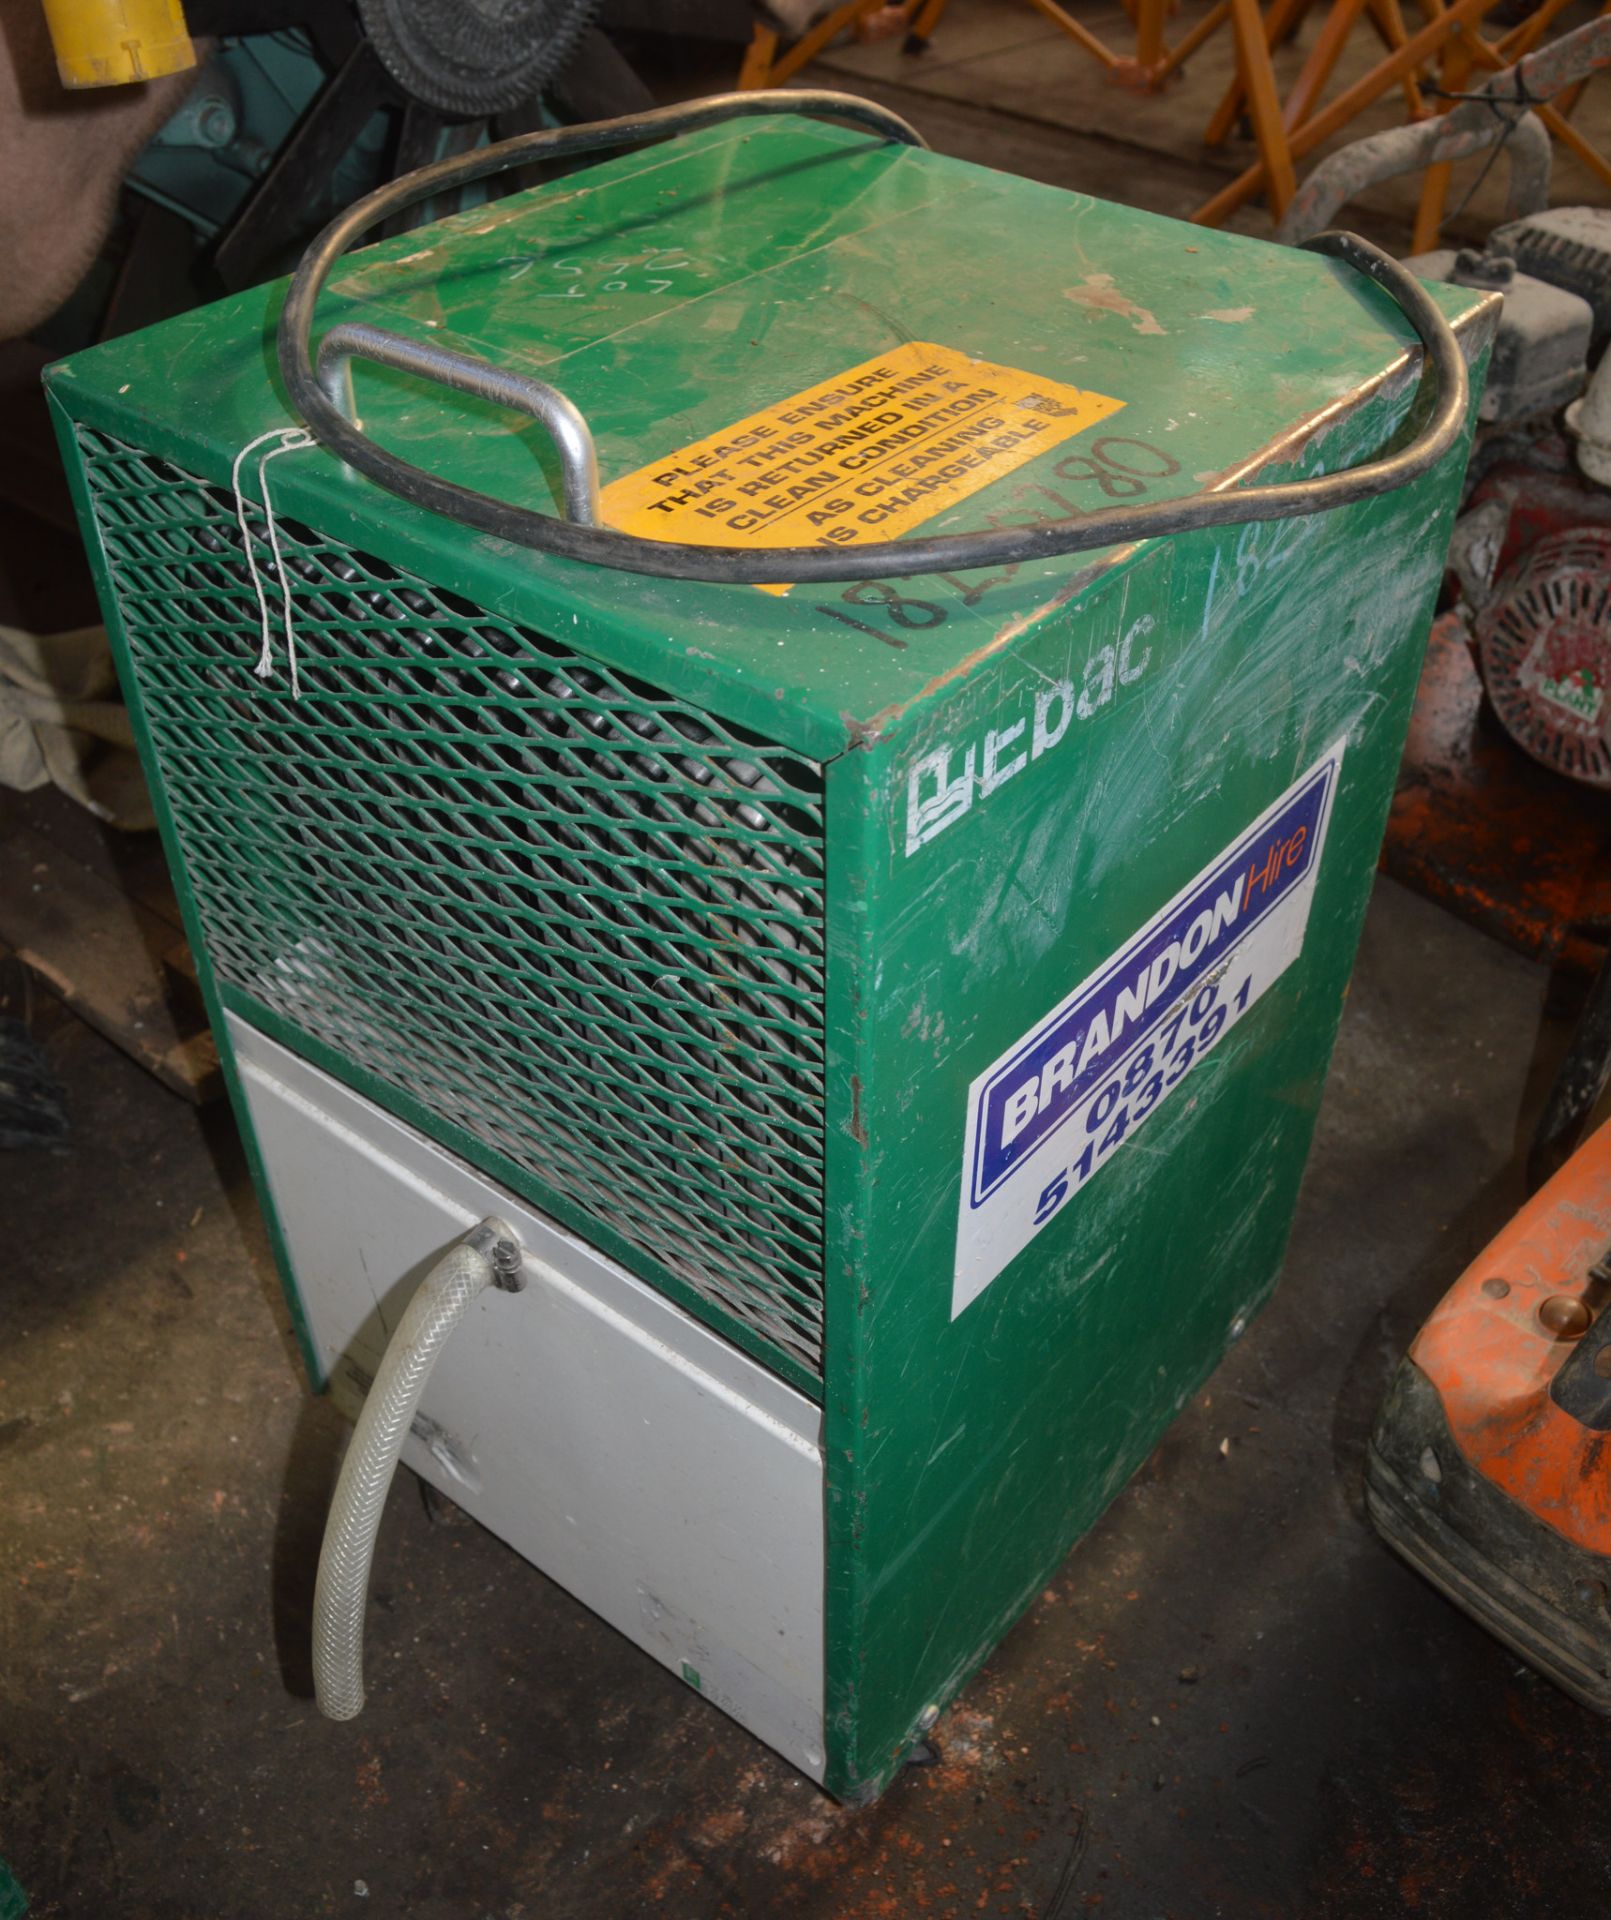 EBAC 110 volt dehumidifier